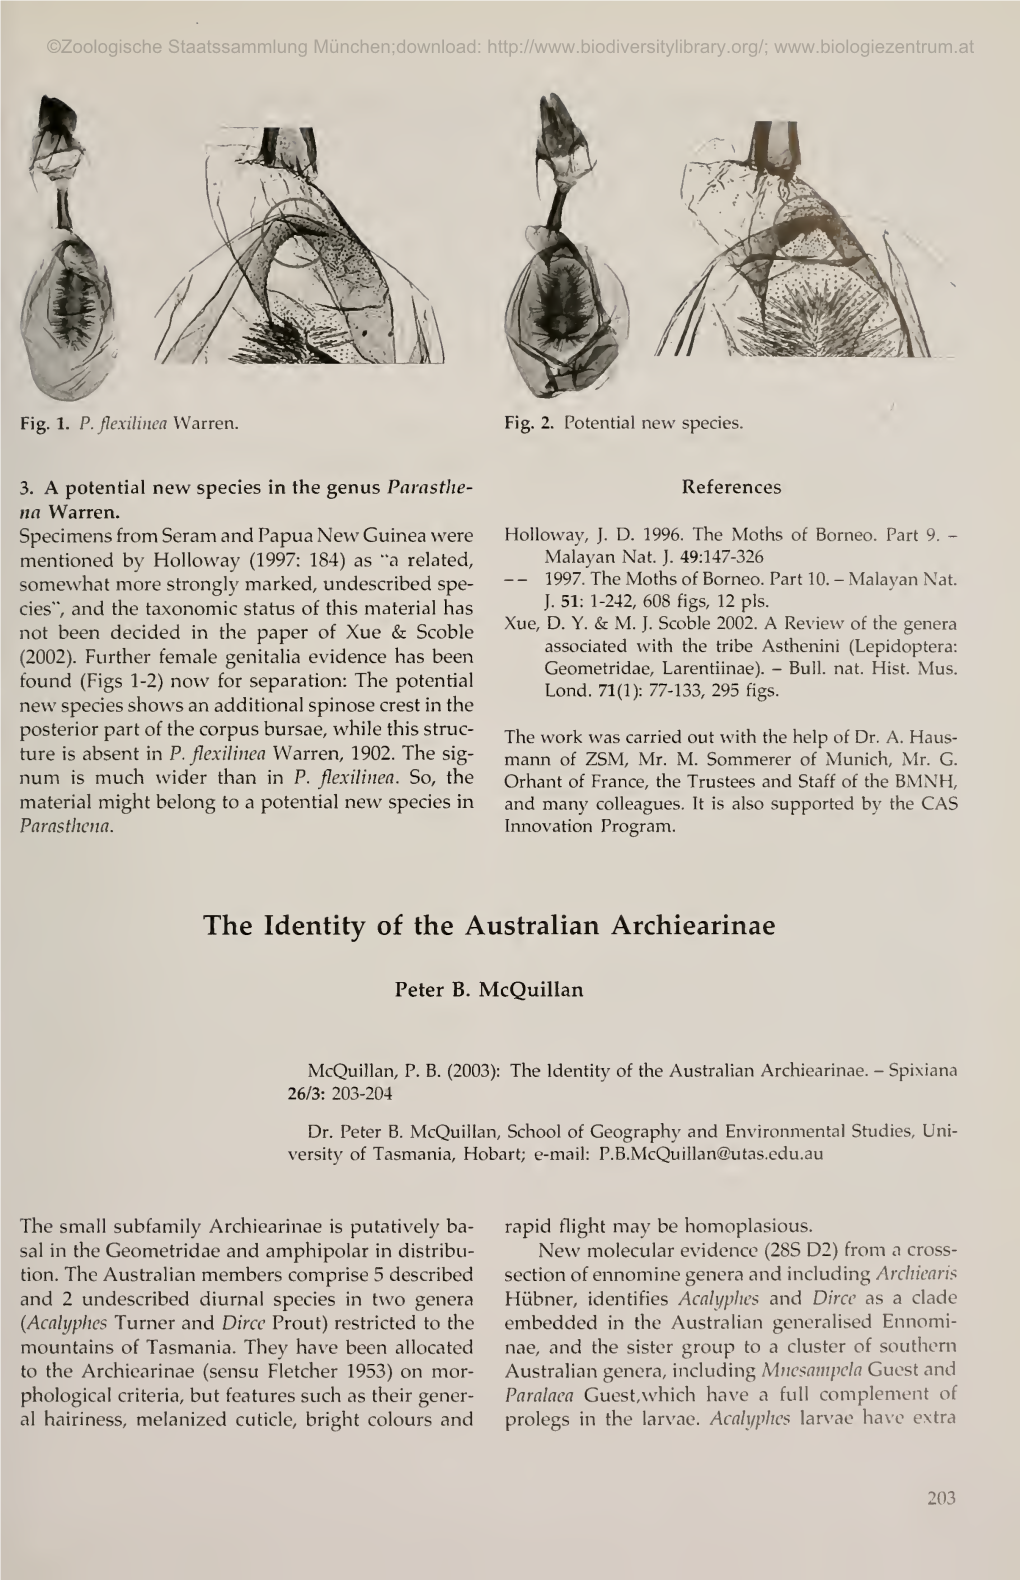 The Identity of the Australianarchiearinae